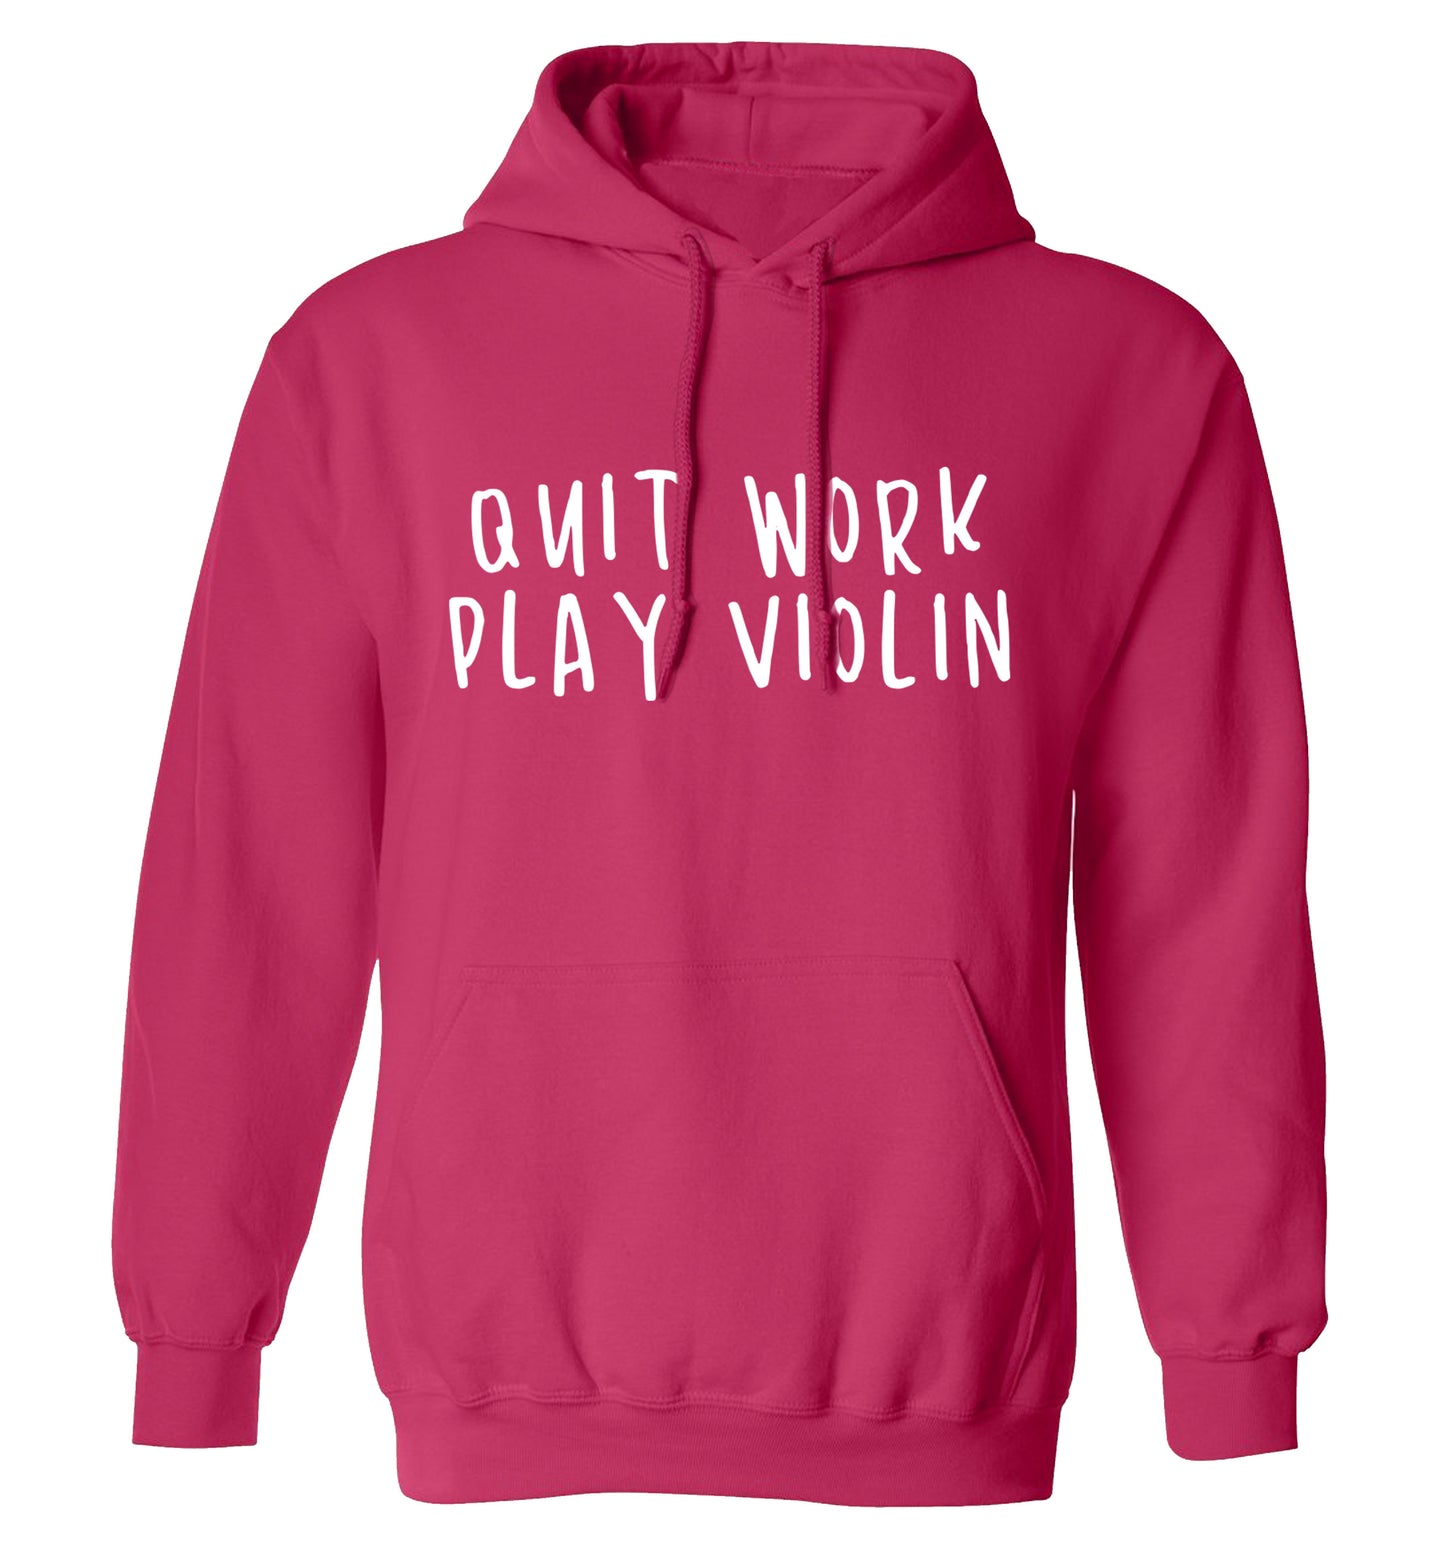 Quit work play violin adults unisex pink hoodie 2XL